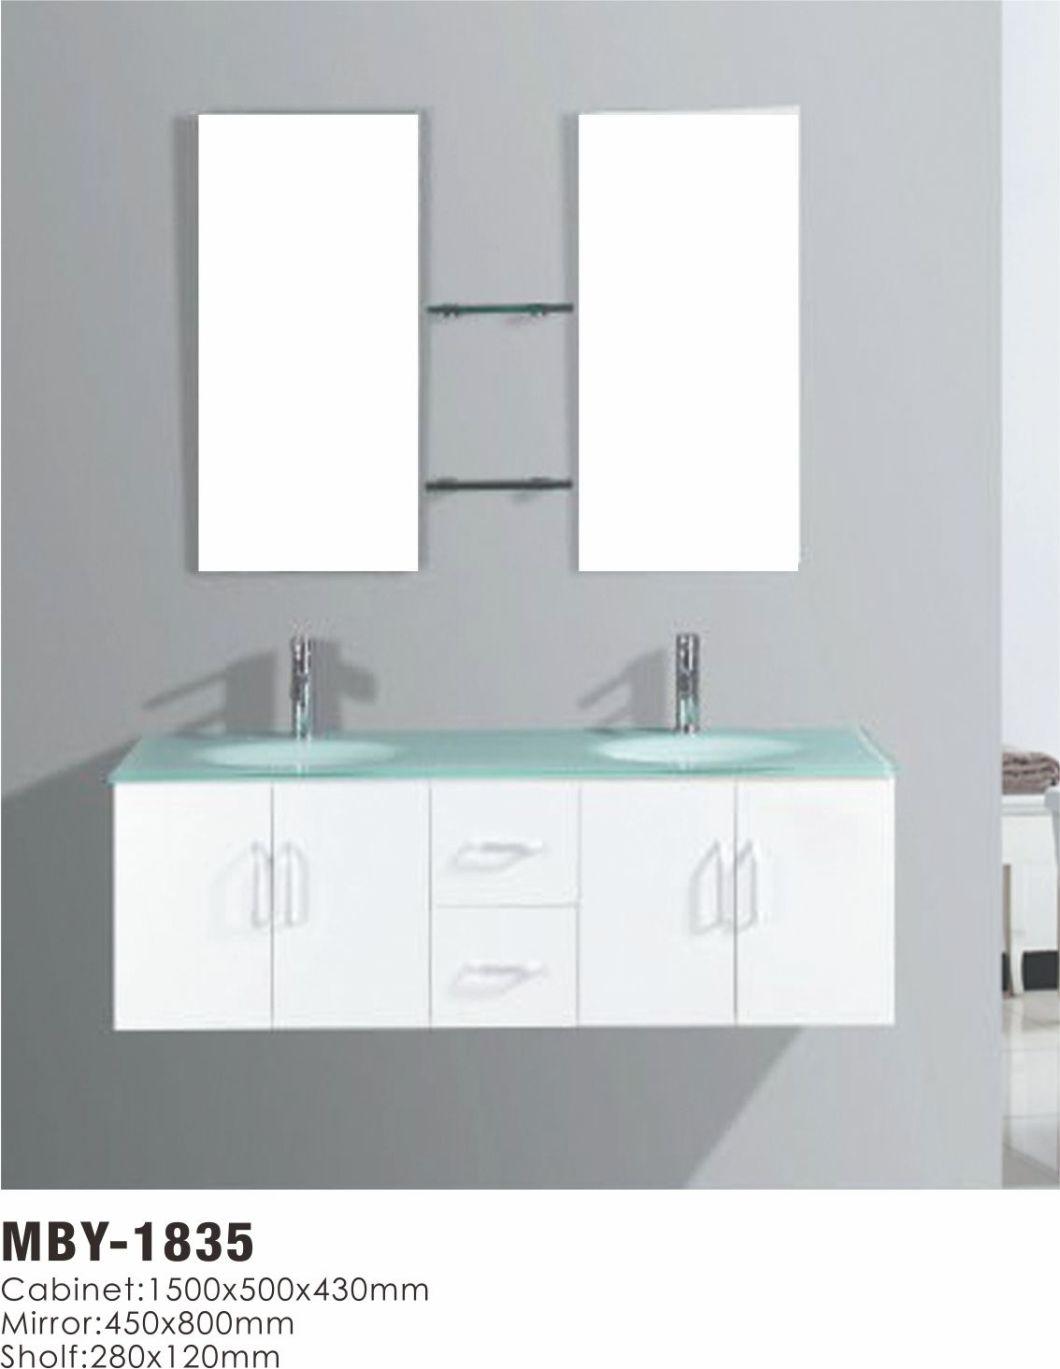 Hanging Wall Cabinet / Hanging Bathroom Cabinets / Bath Vanity